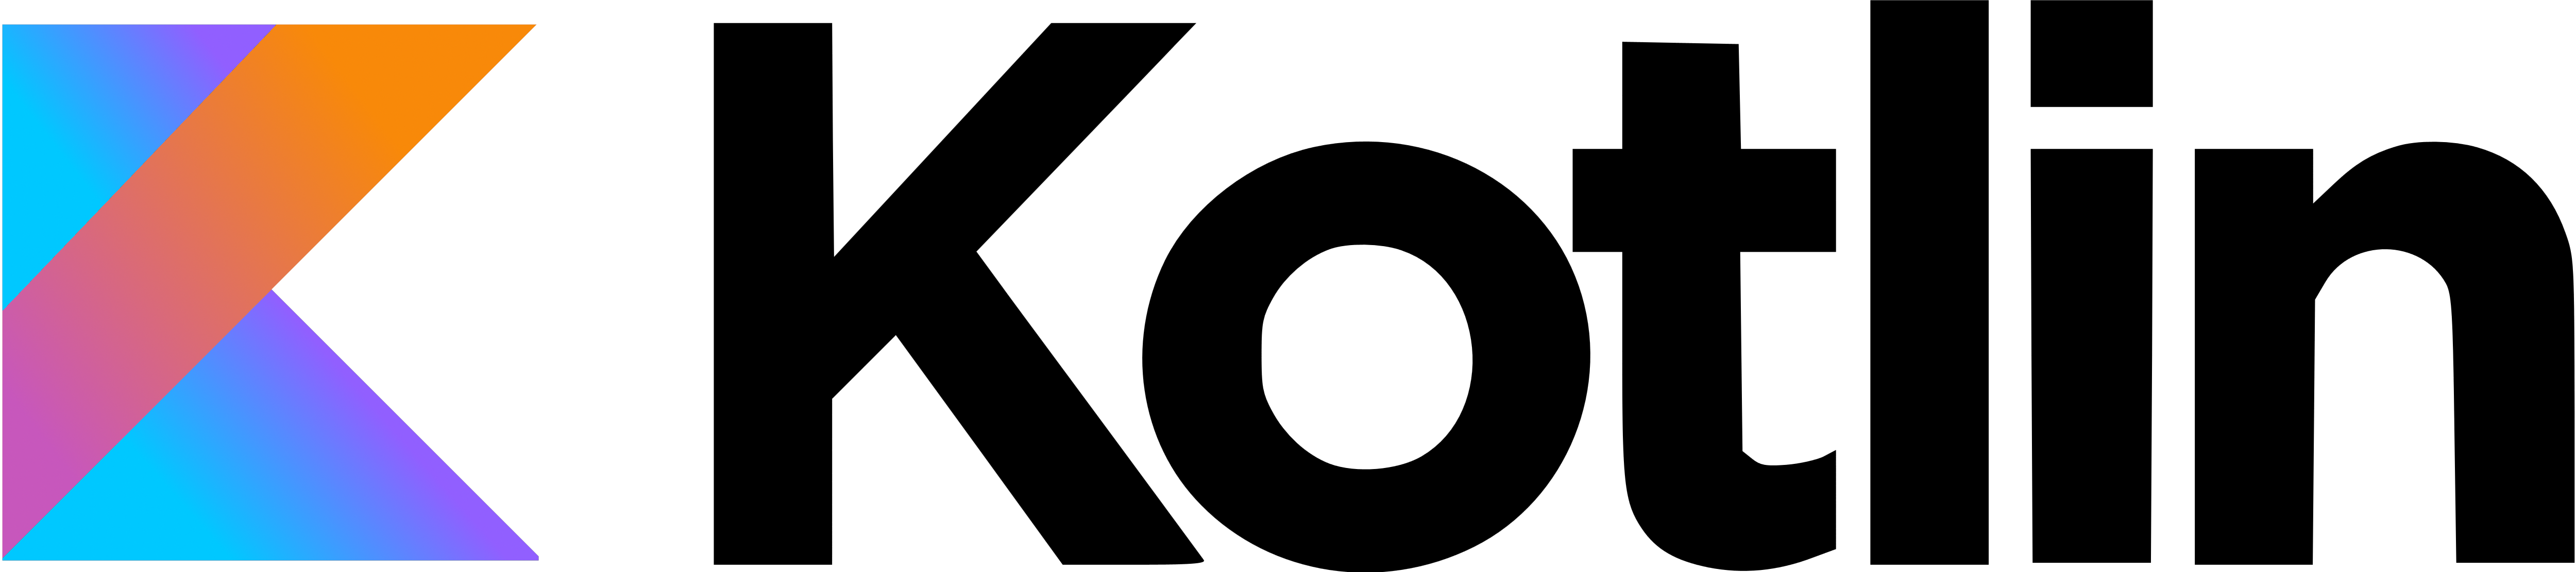 Kotlin Logo PNG - 176999